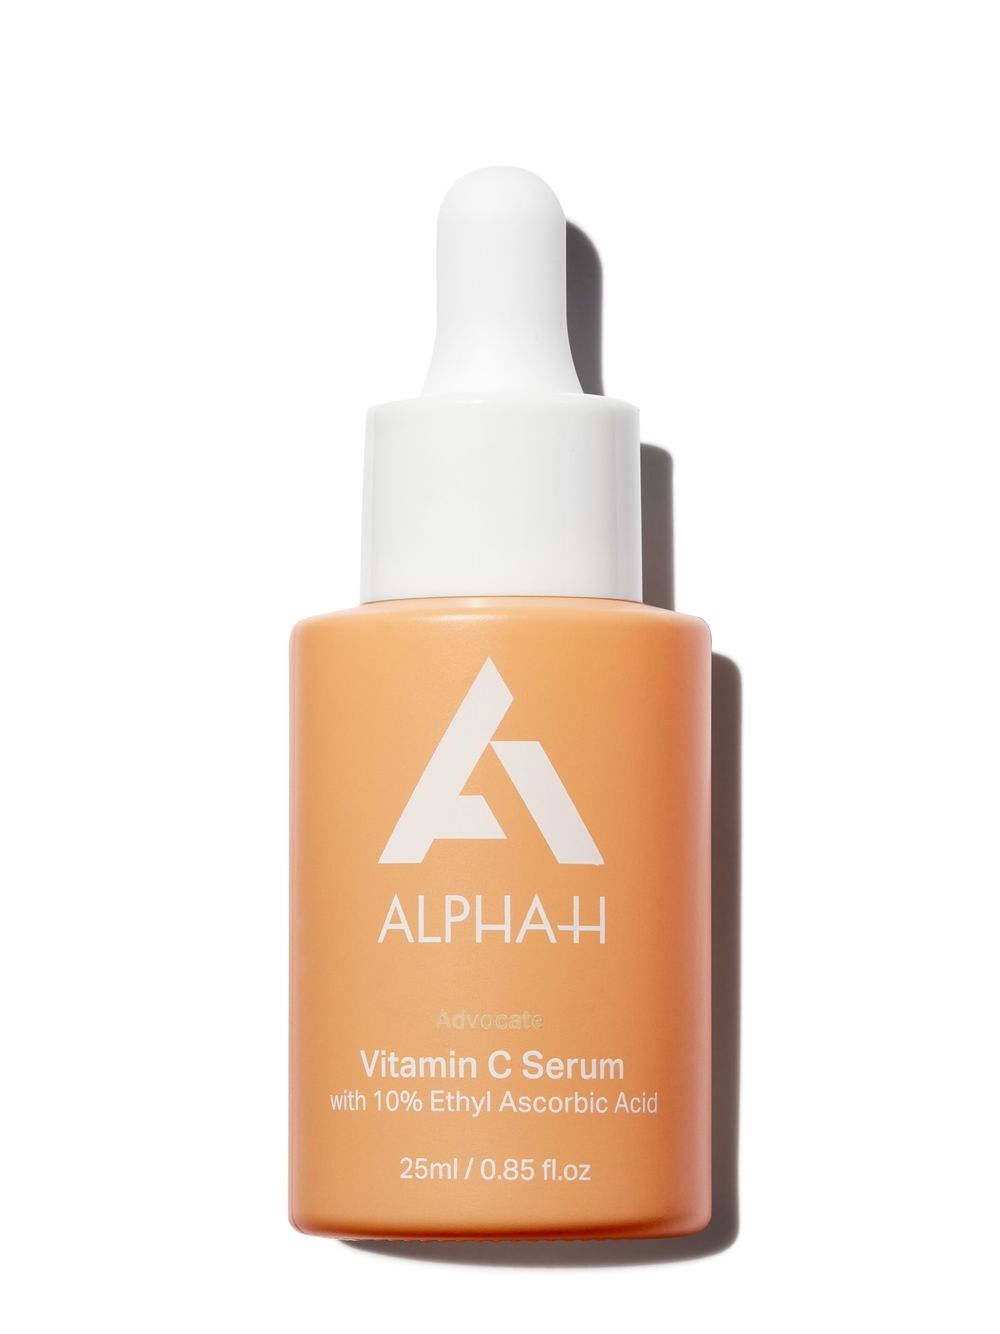 alpha-h vitamin c serum 10% ethyl ascorbic acid - no color